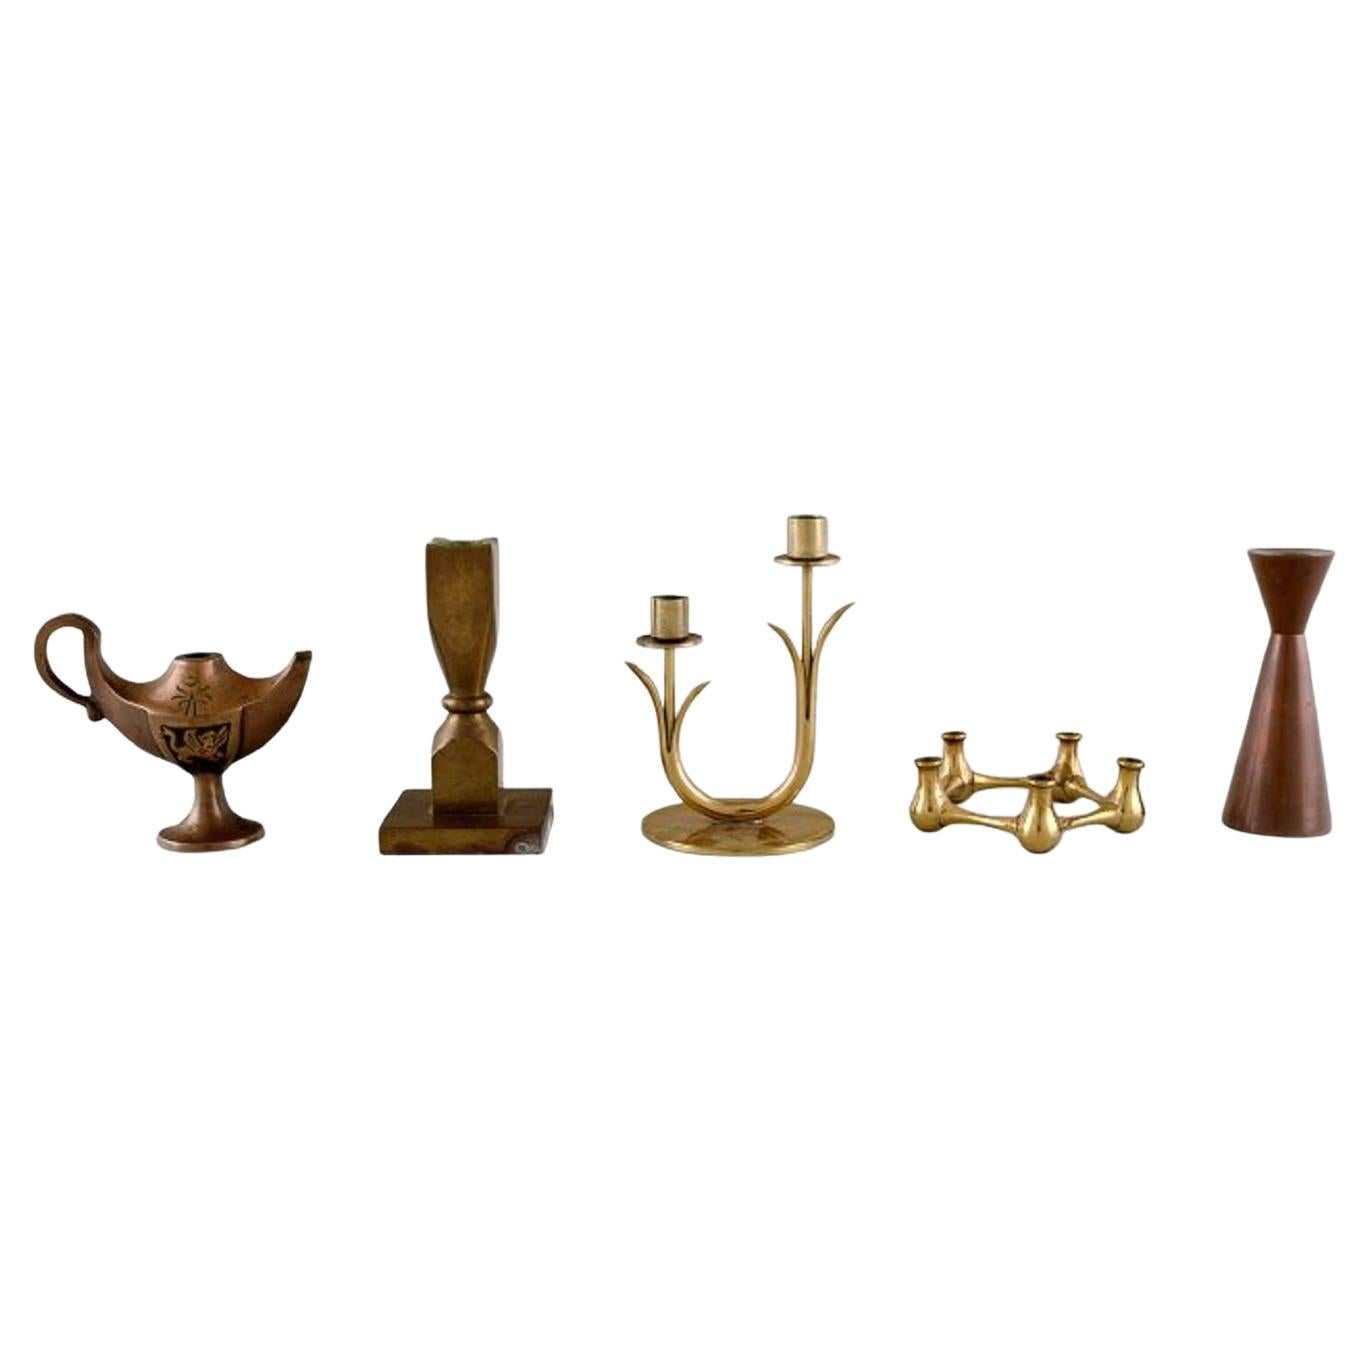 Quistgaard, Gusum, Ystad Metall Et Al, Oil Lamp and Four Candlesticks in Brass